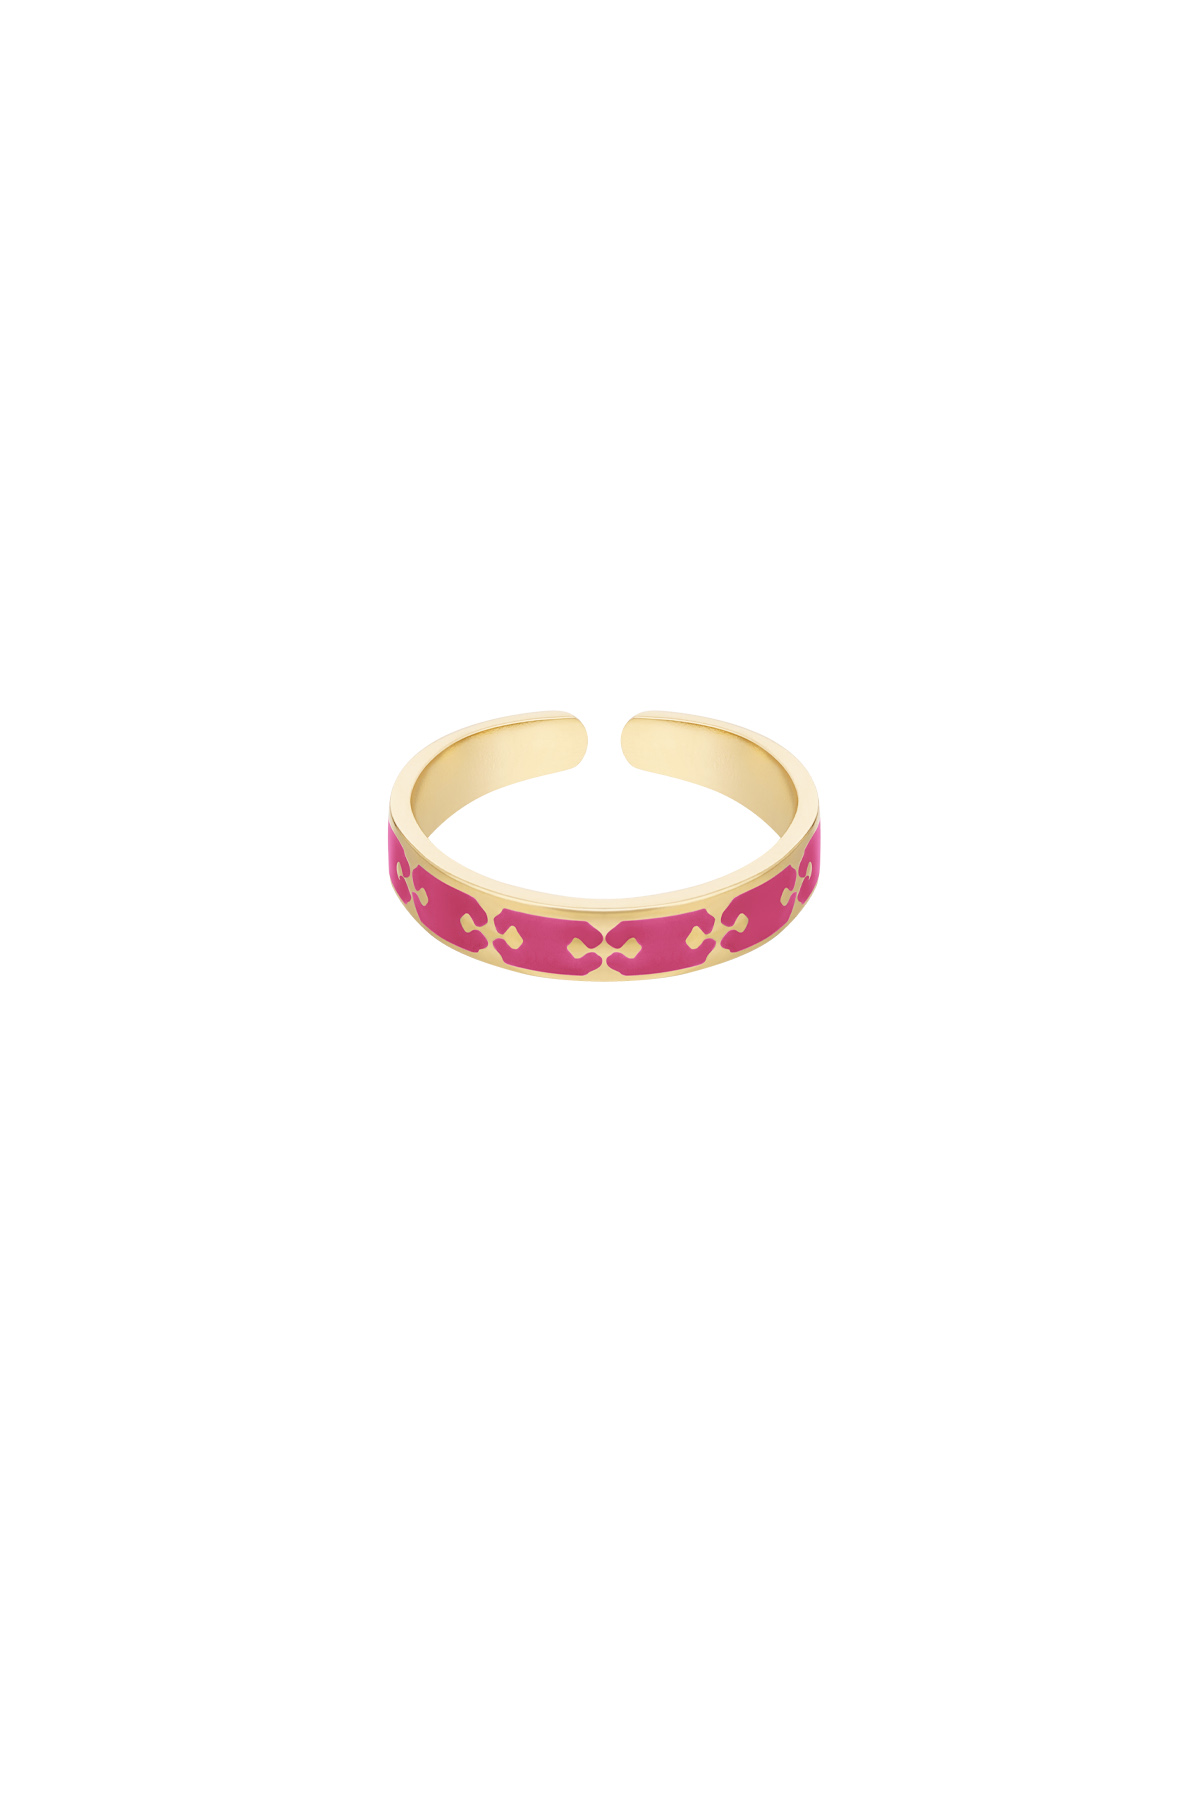 Ring colorful print - gold/fuchsia h5 